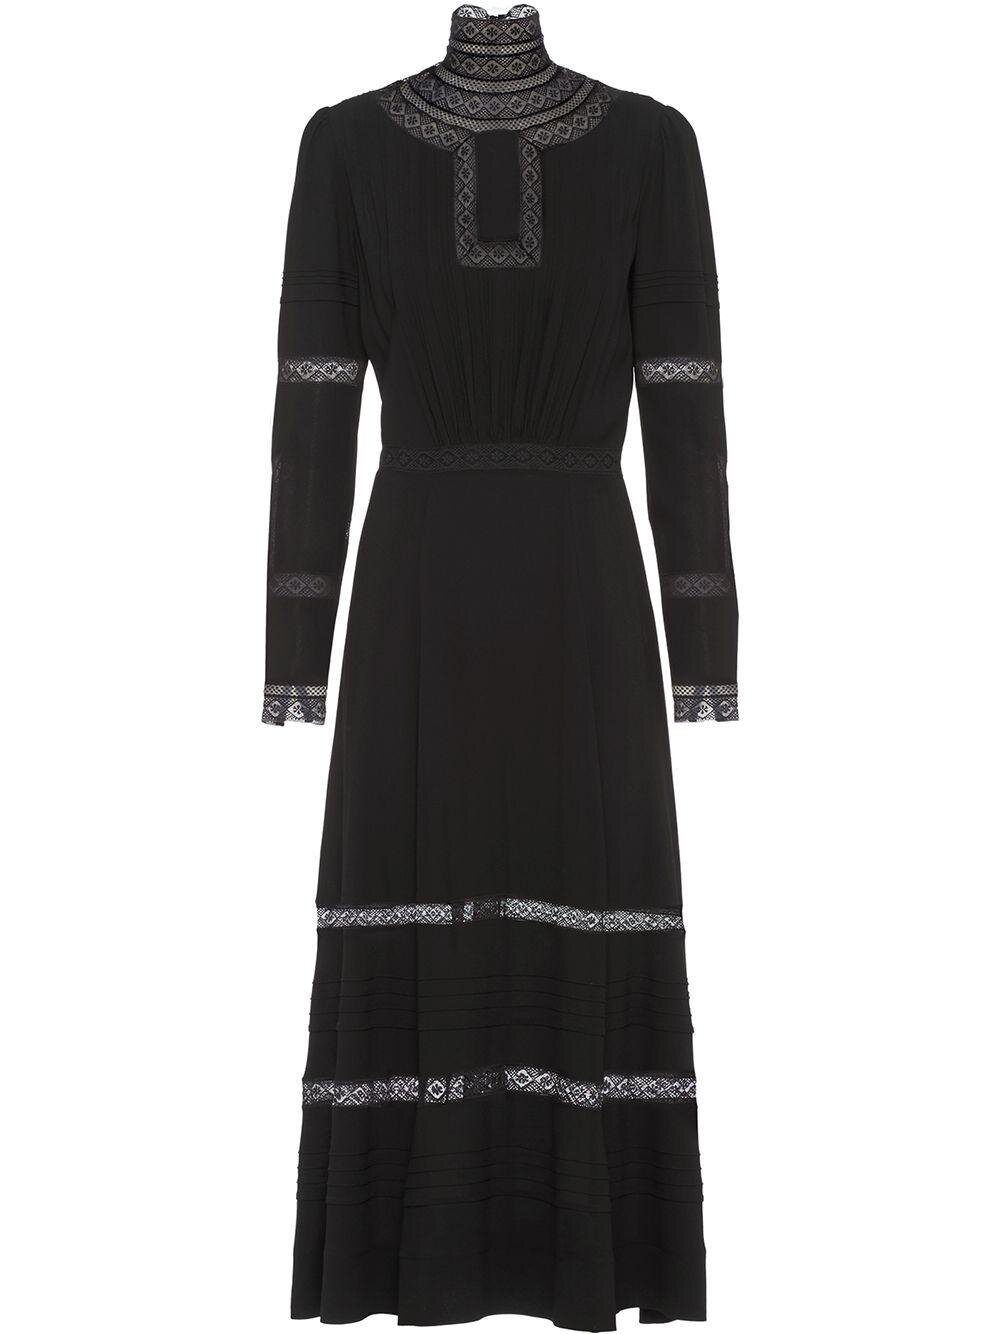 Prada Crochet Embellished Sablé Dress in Black.jpg